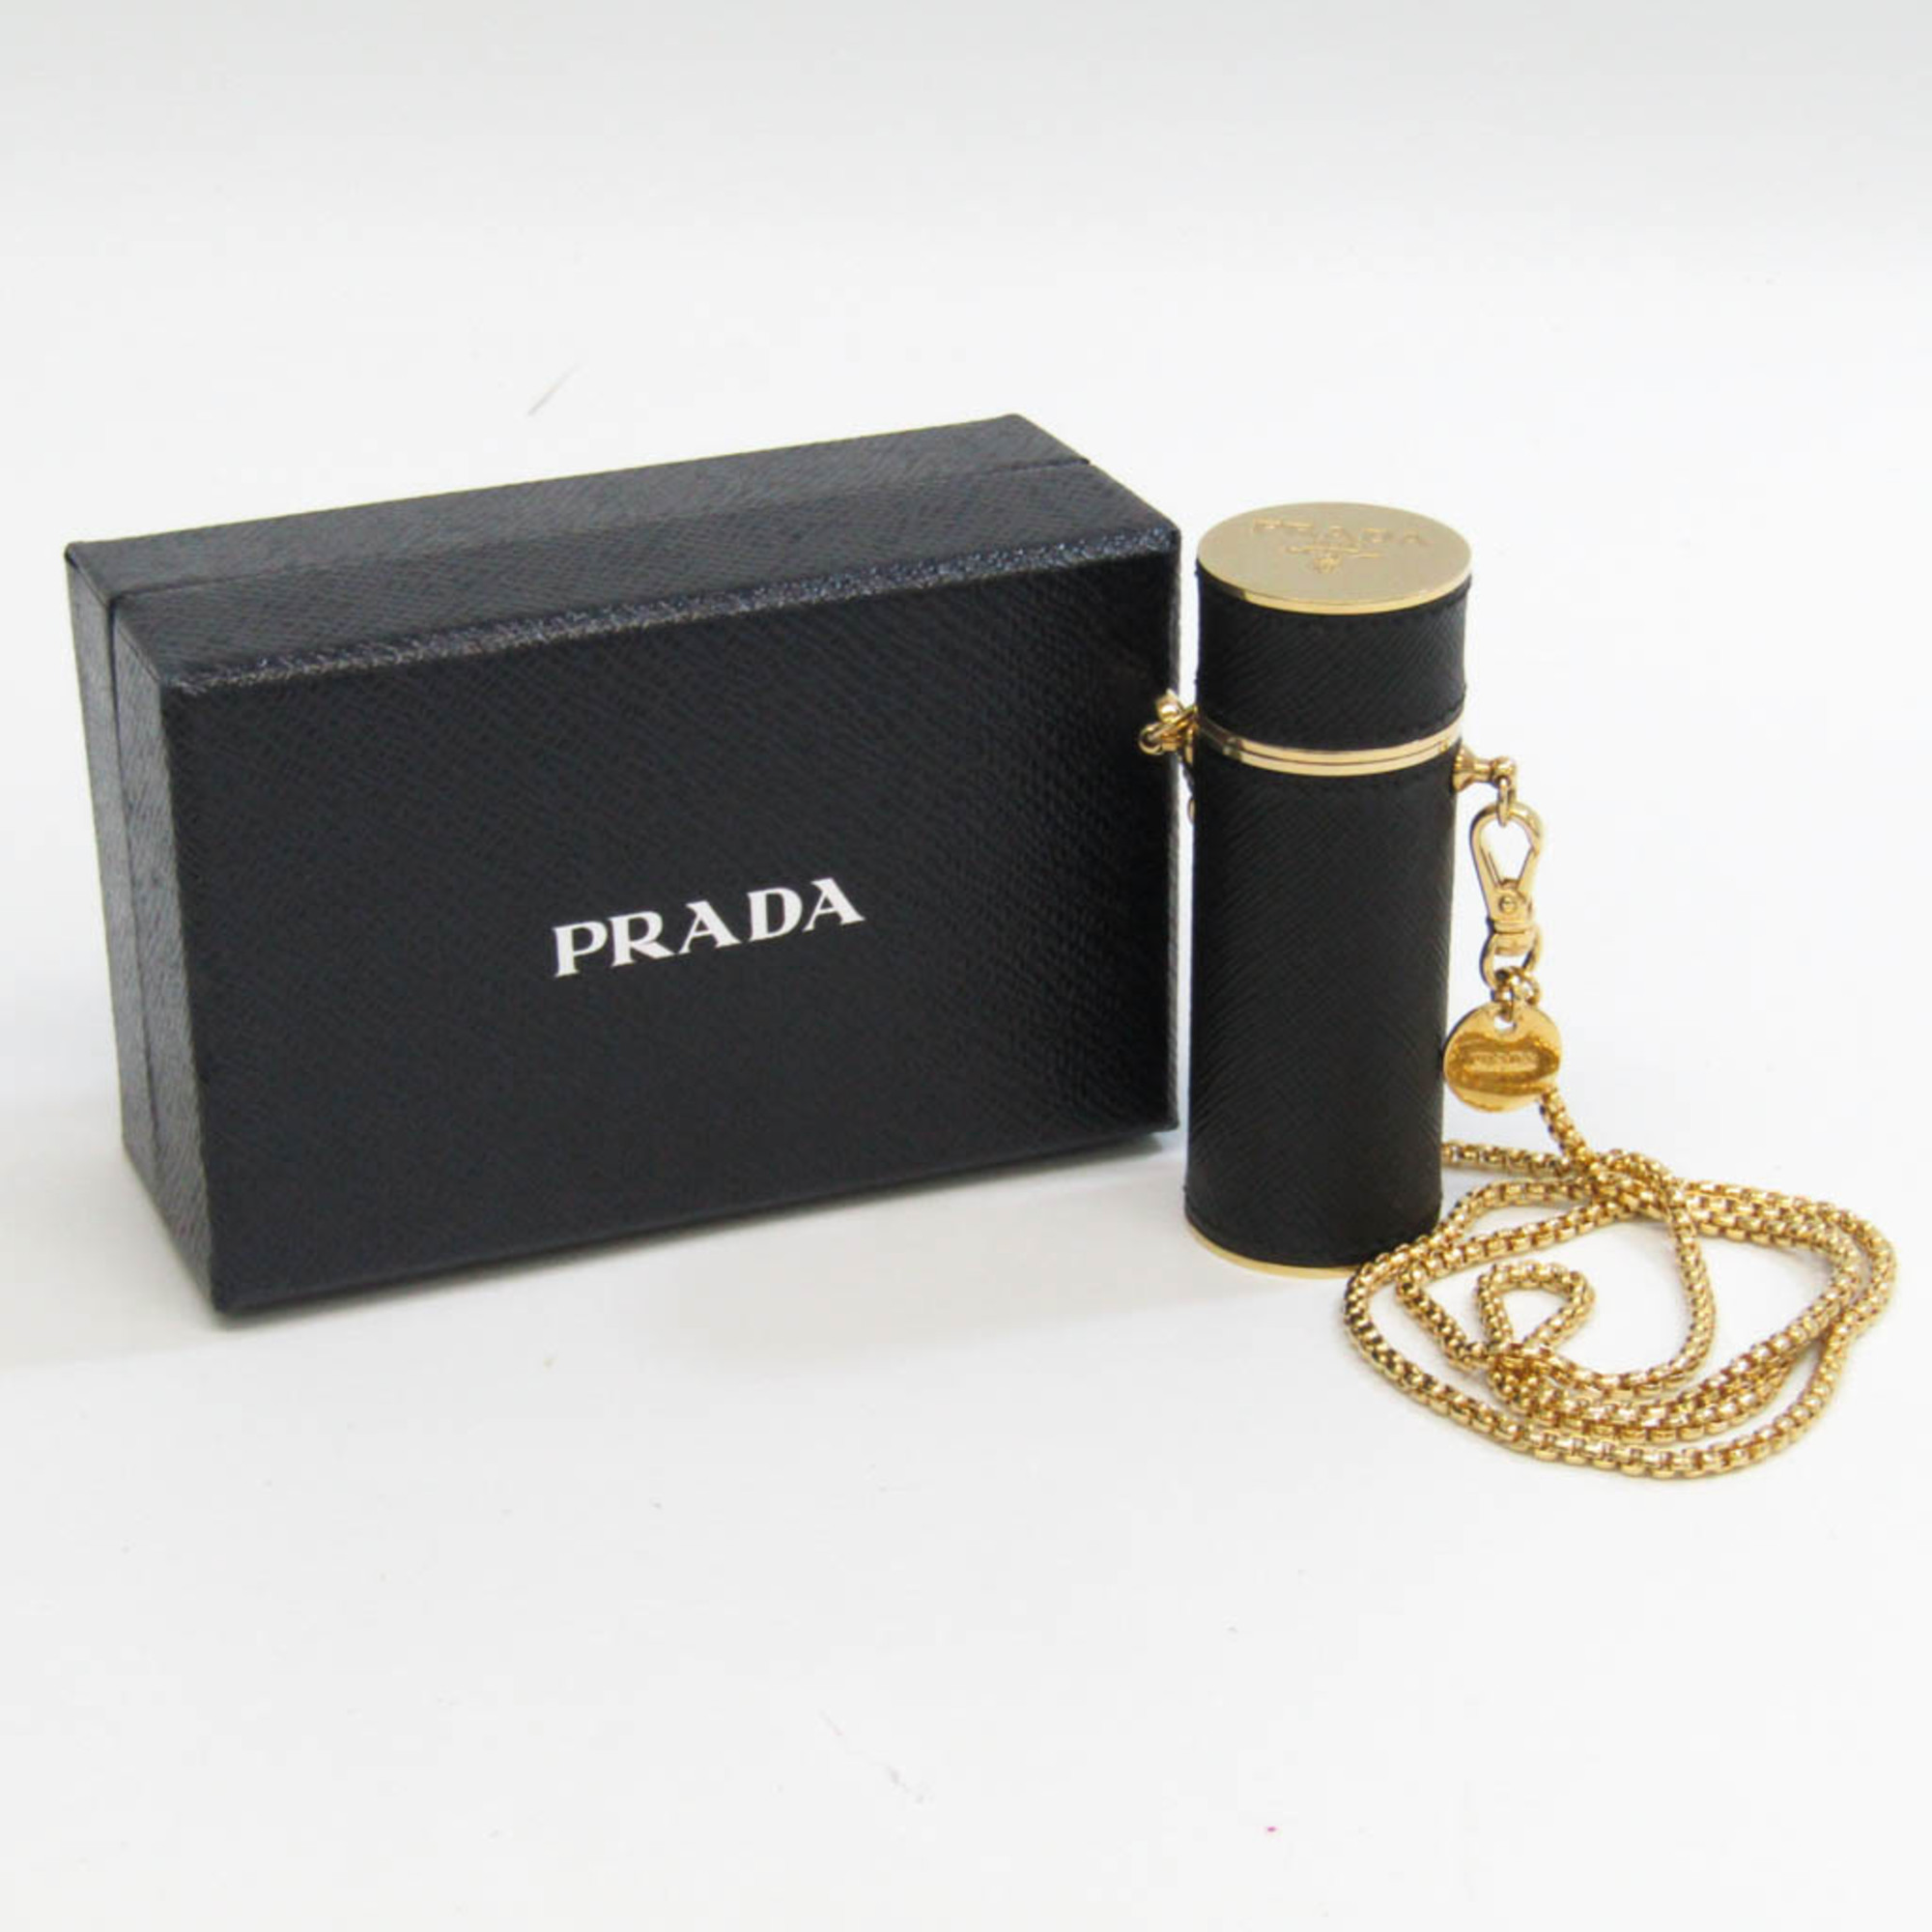 Prada Leather Metal Lipstick Case Black,Gold